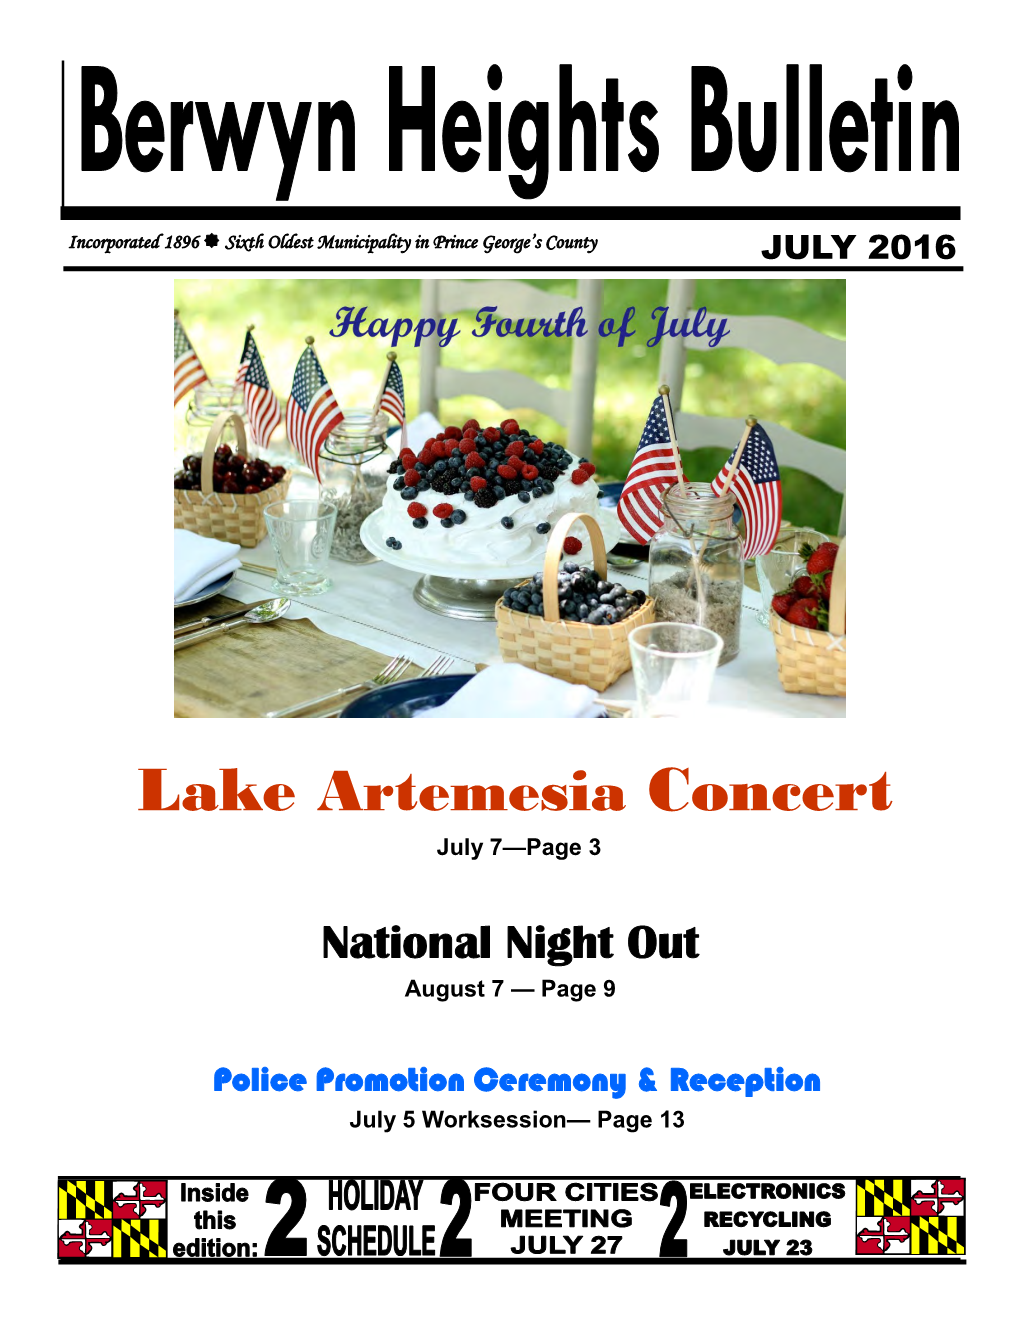 Lake Artemesia Concert July 7—Page 3